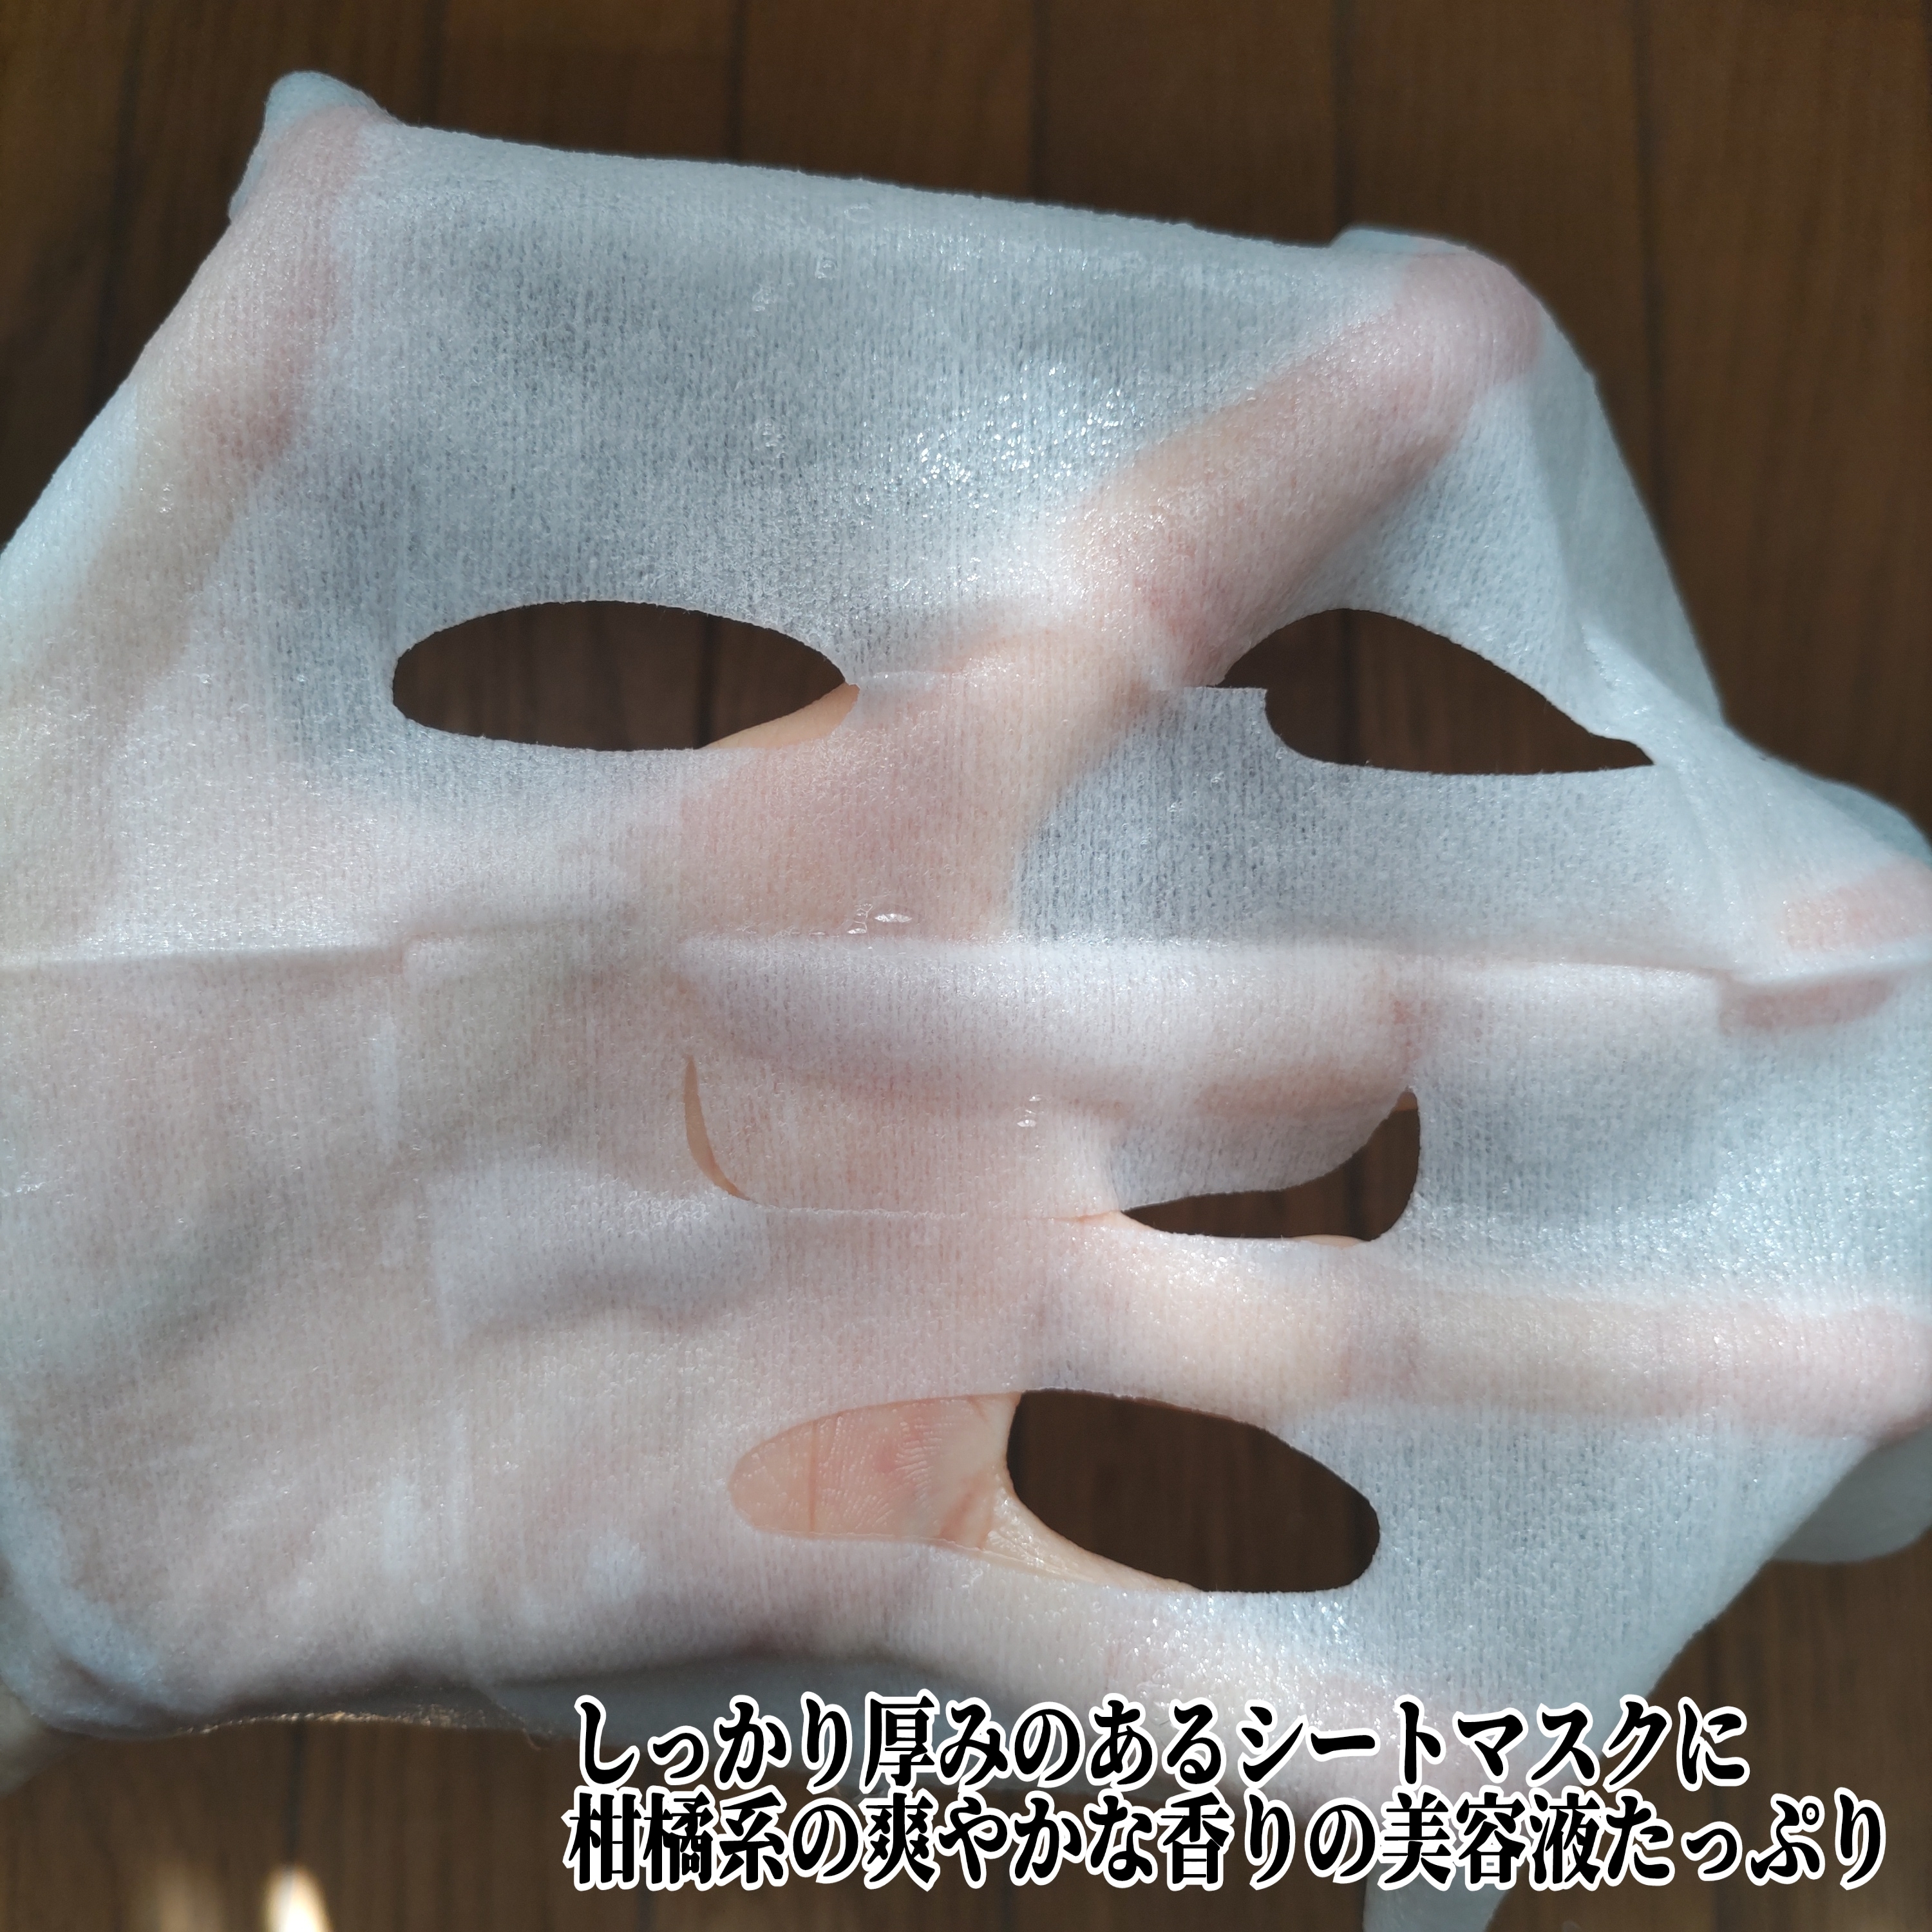 C VITAS Cフォーカスマスクを使ったYuKaRi♡さんのクチコミ画像4